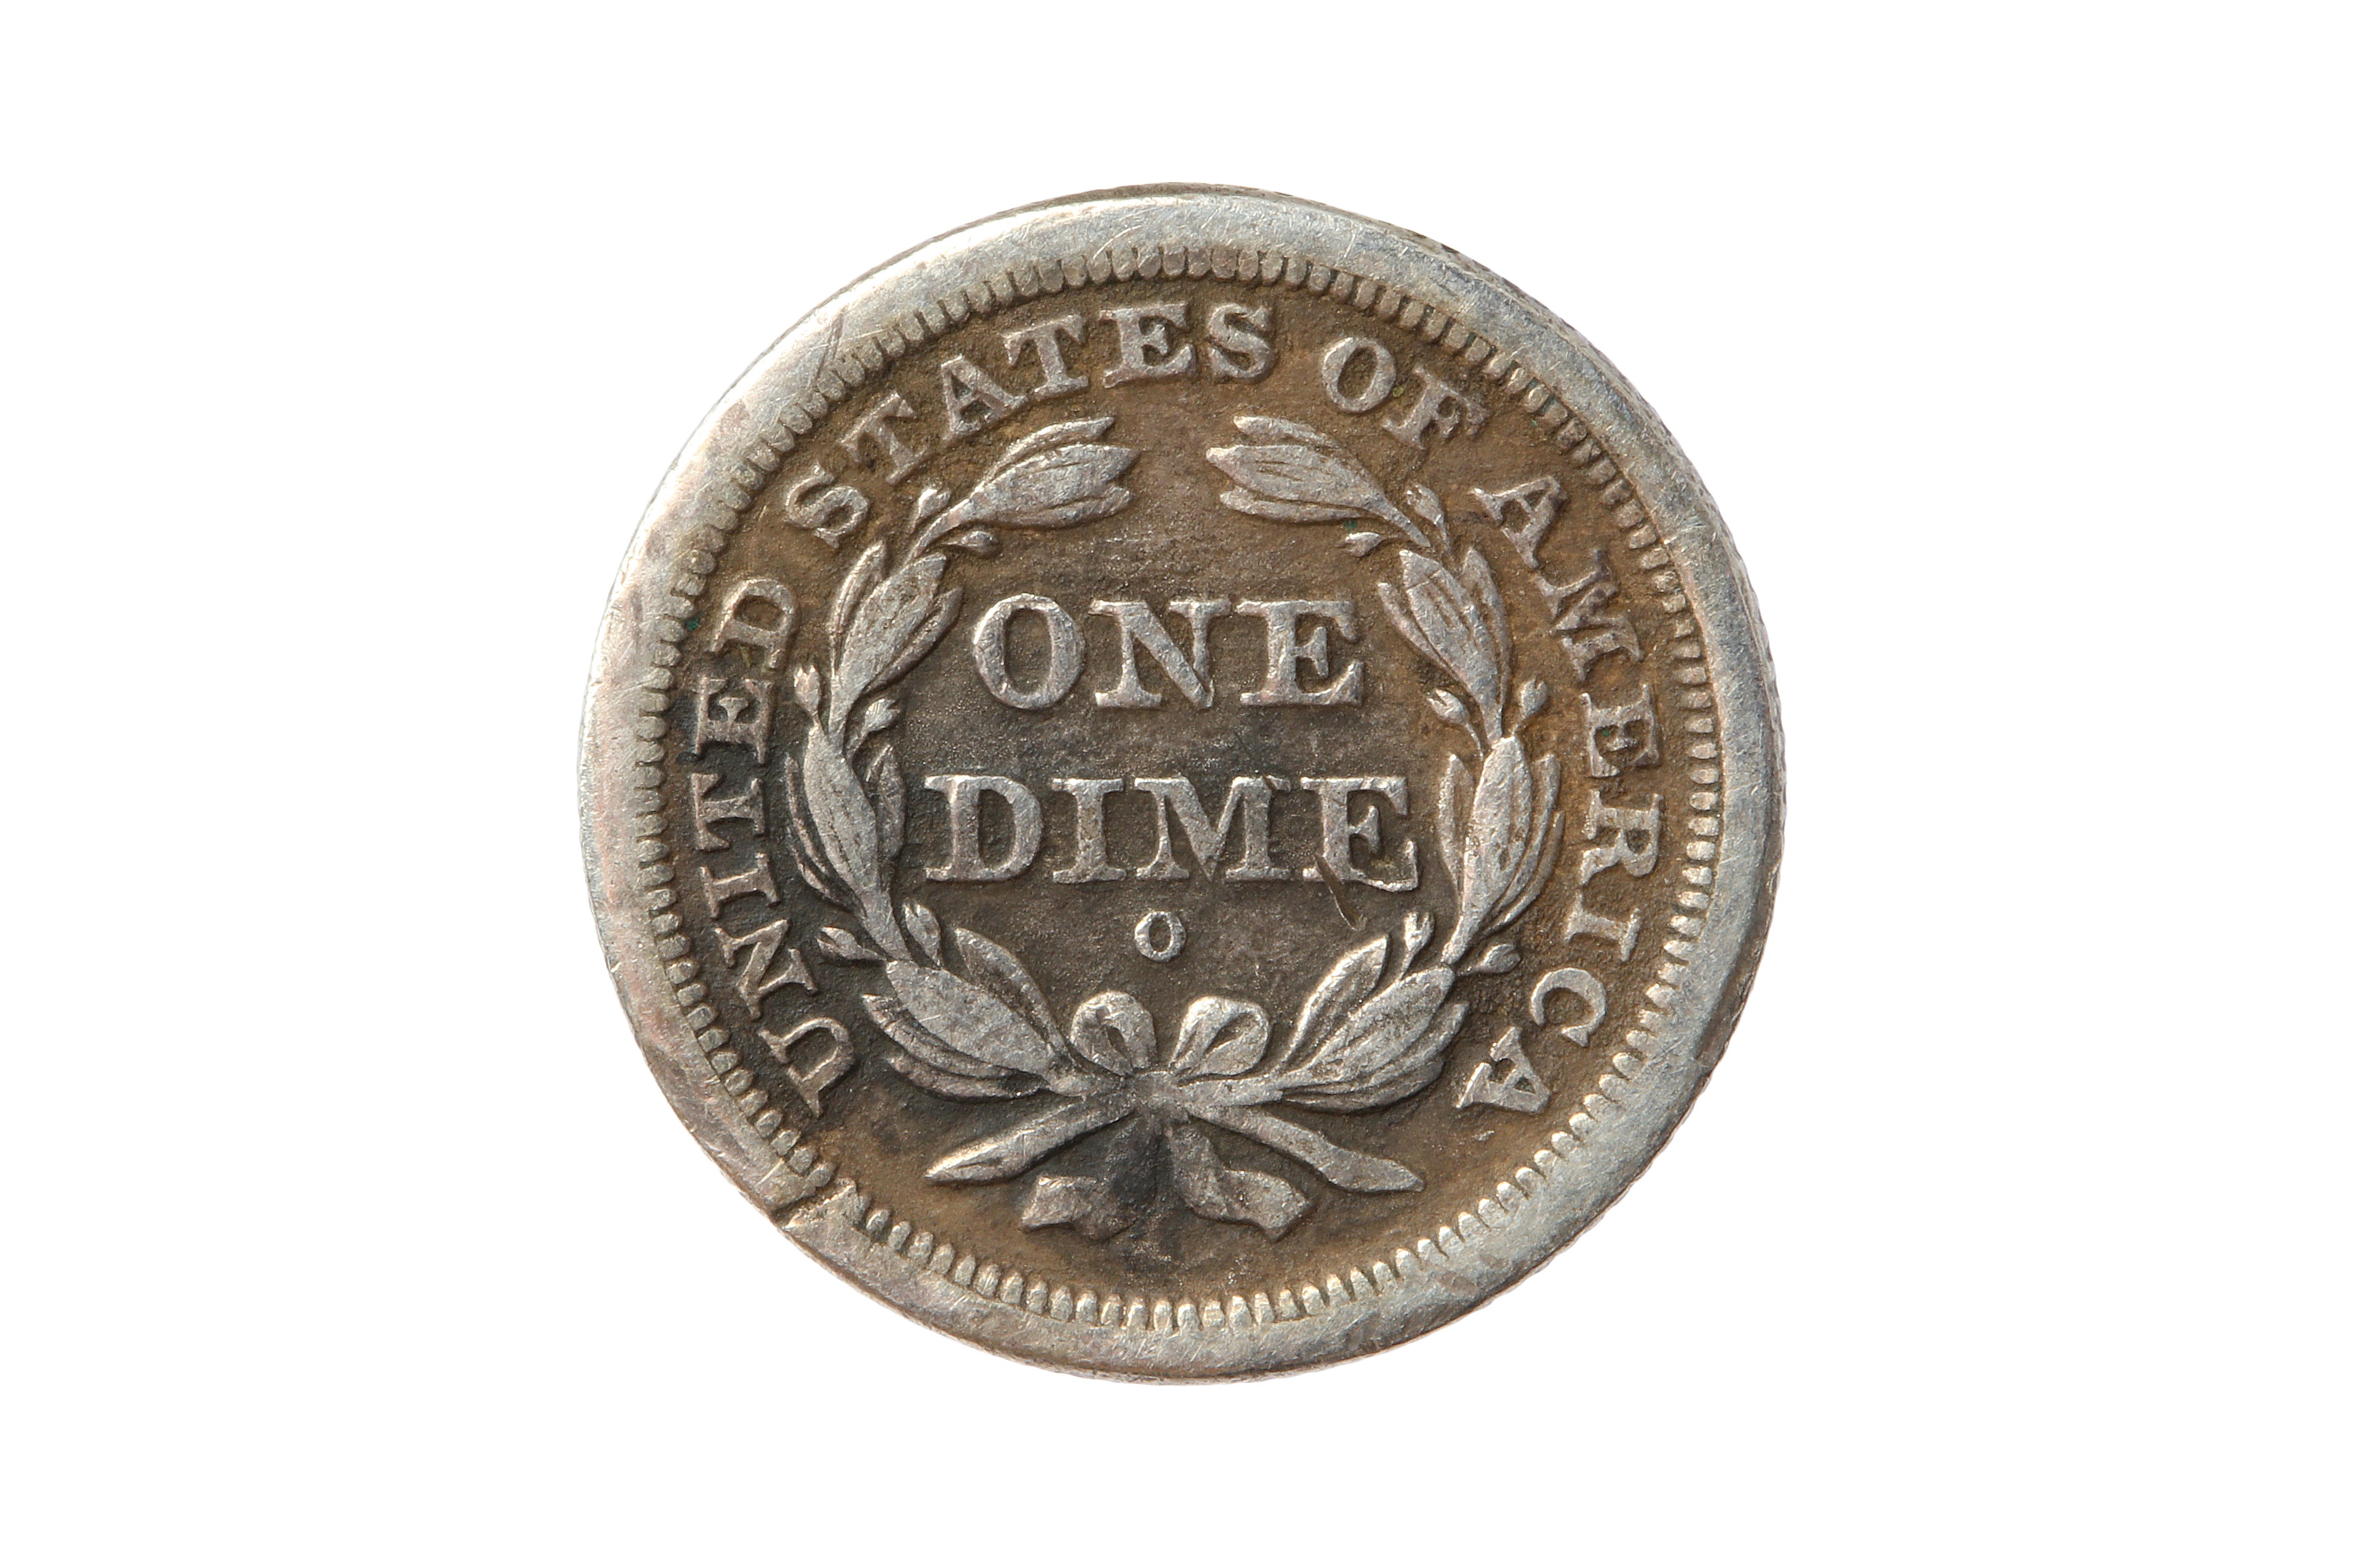 USA, 1841-O 10 CENTS/DIME. - Image 2 of 2